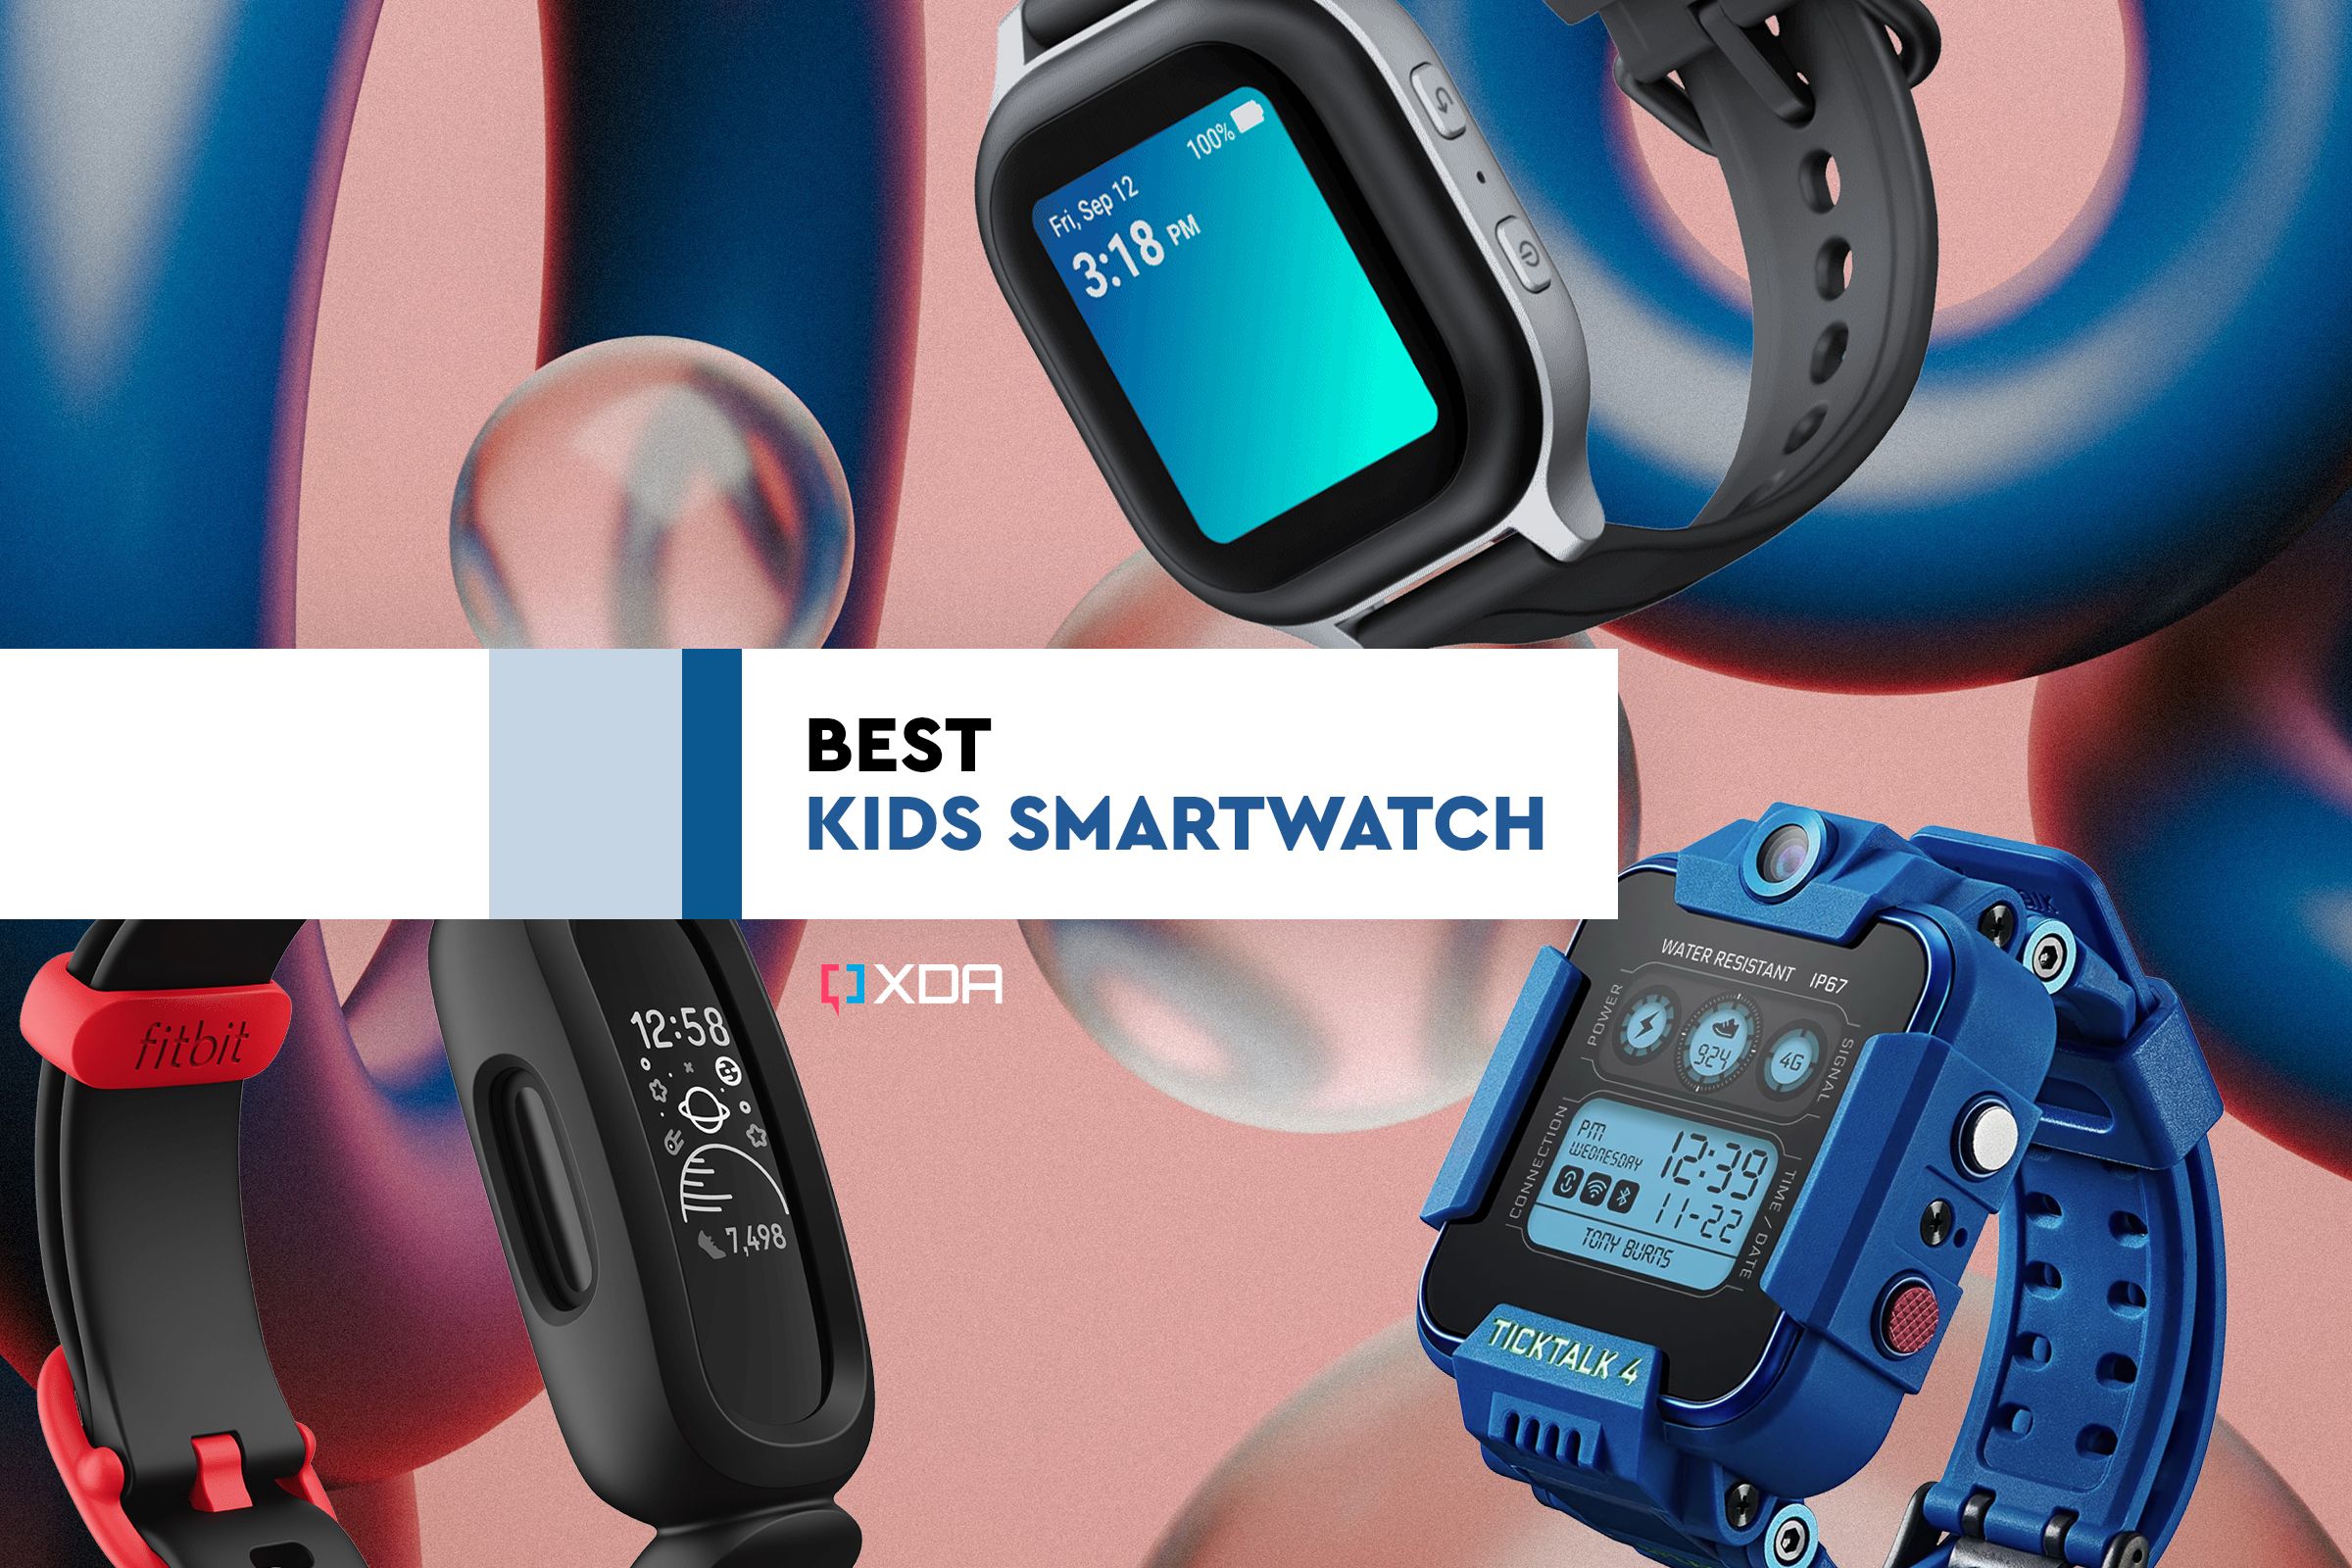 TickTalk Watch Reviews - The Best Kid's Smart Watch Phone